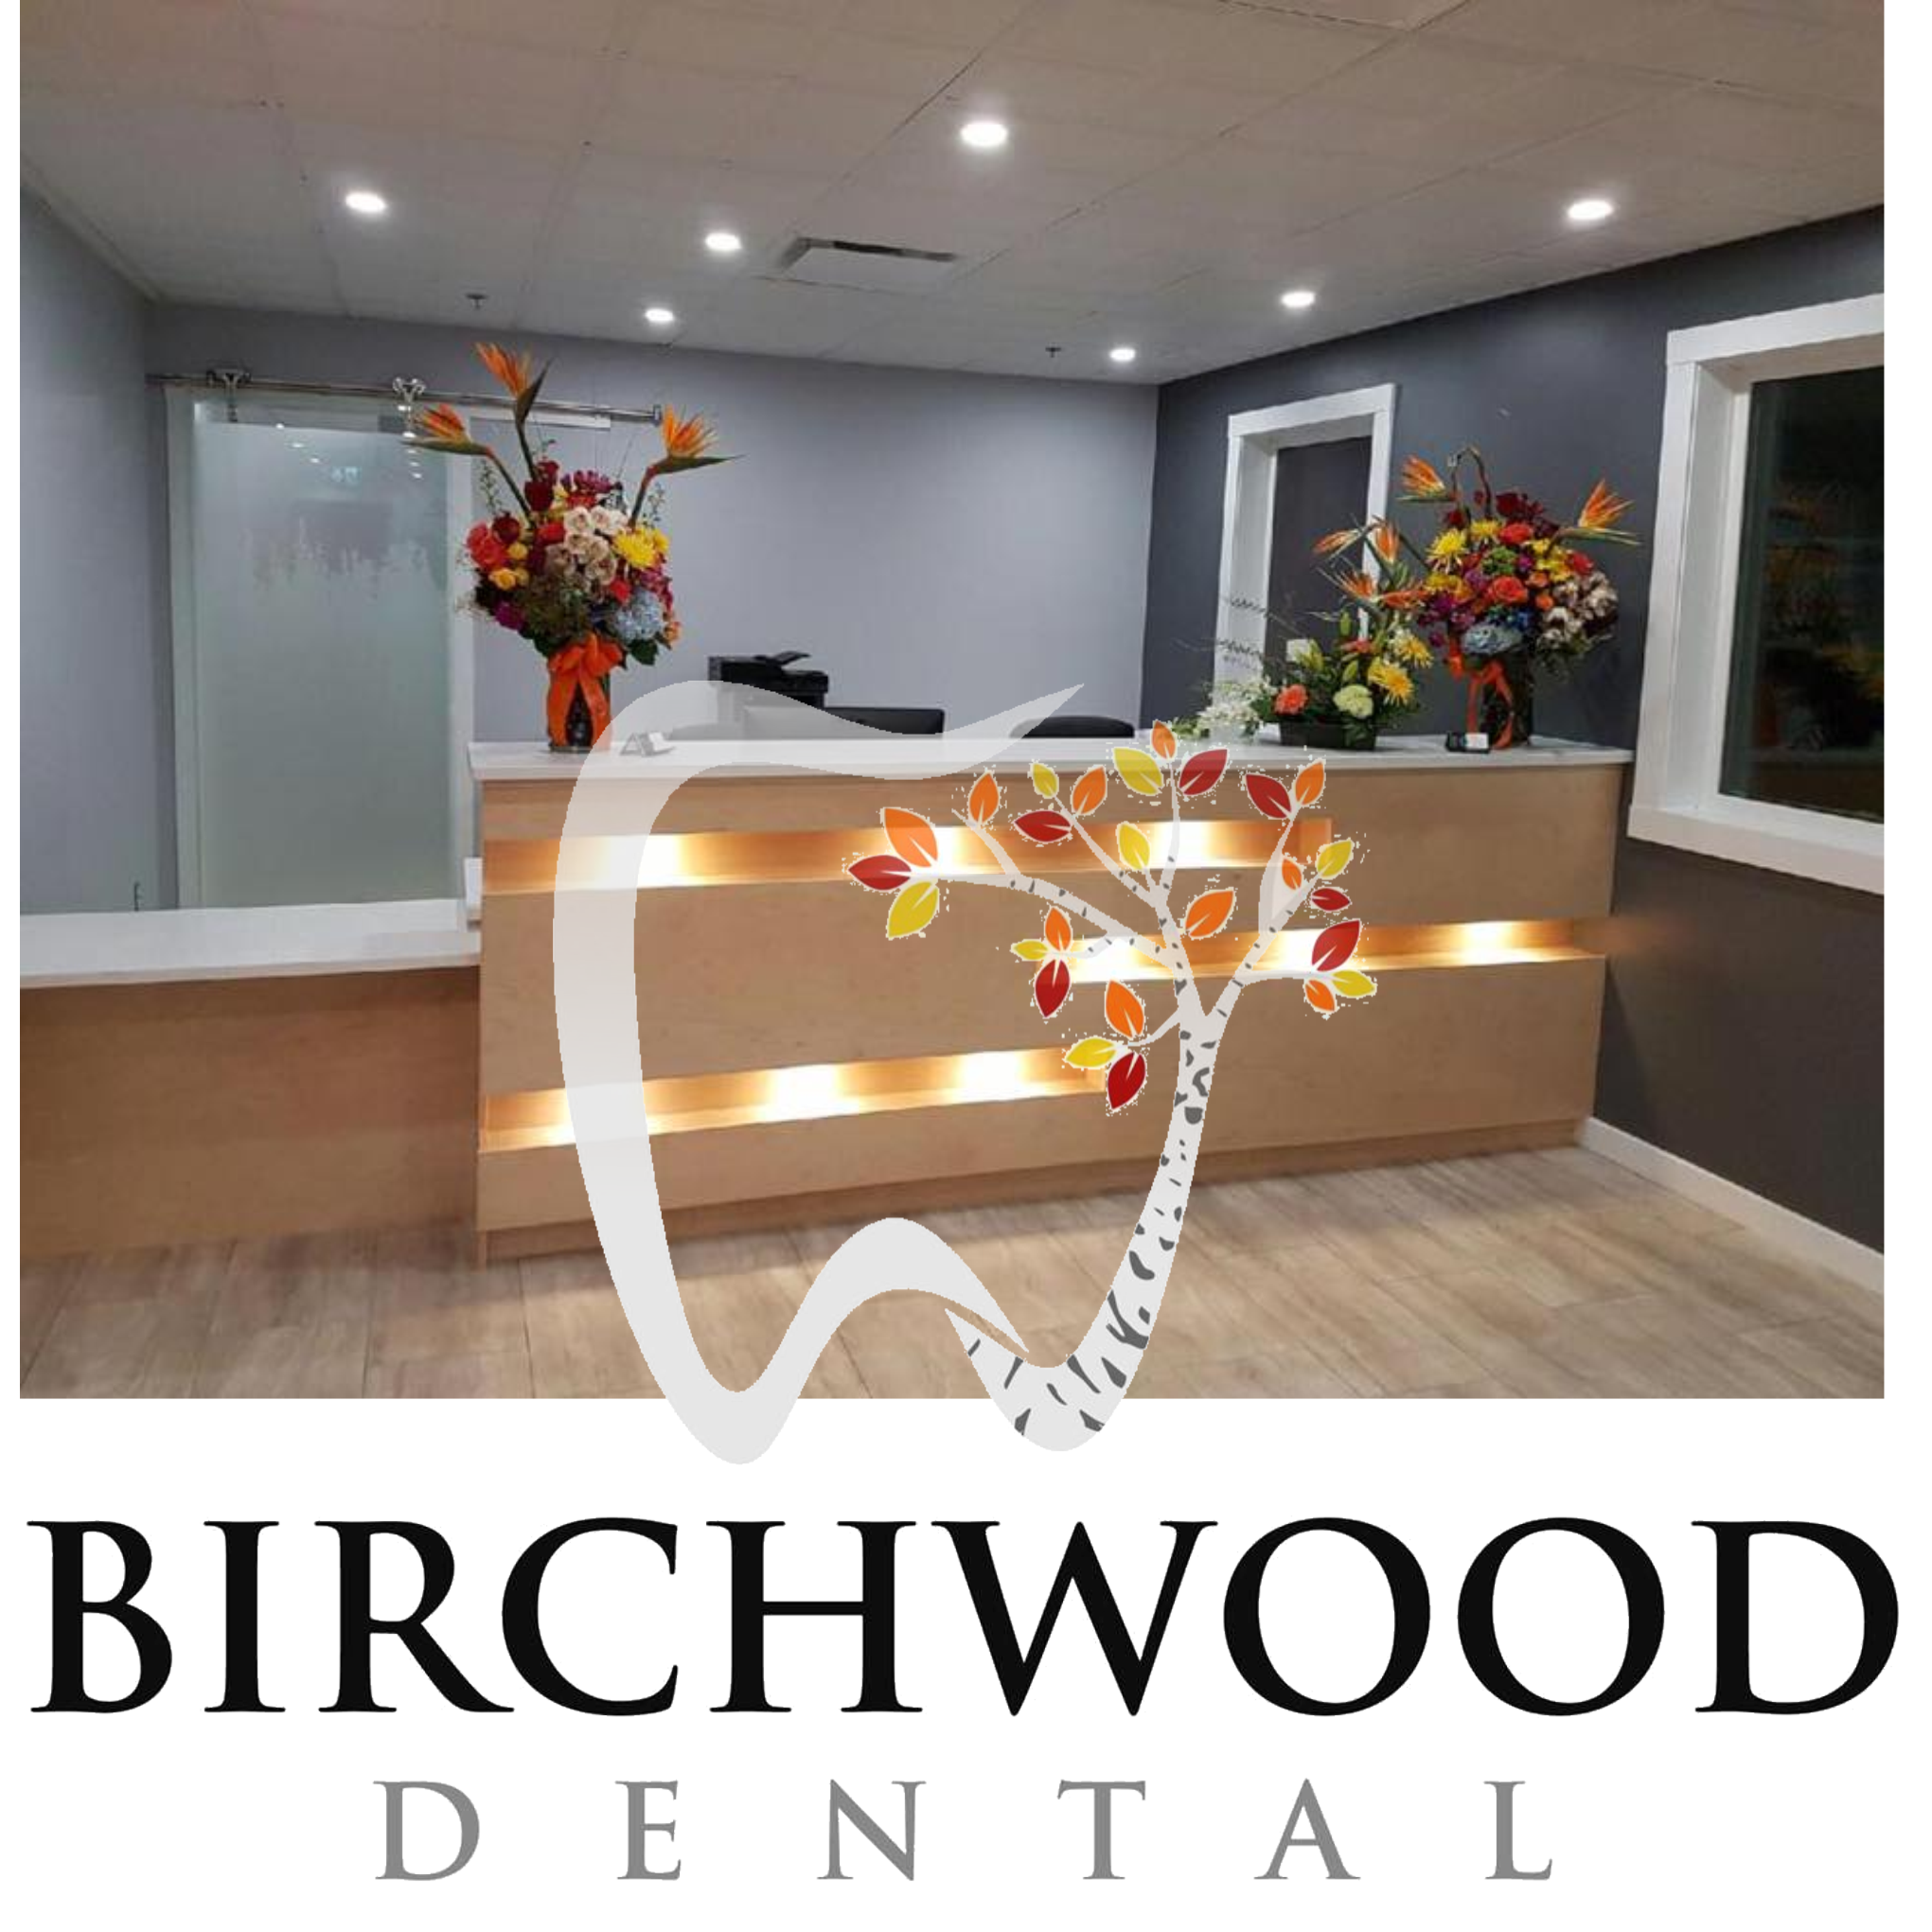 take the tour of Birchwood Dental, Yellowknife's newest dental clinic!